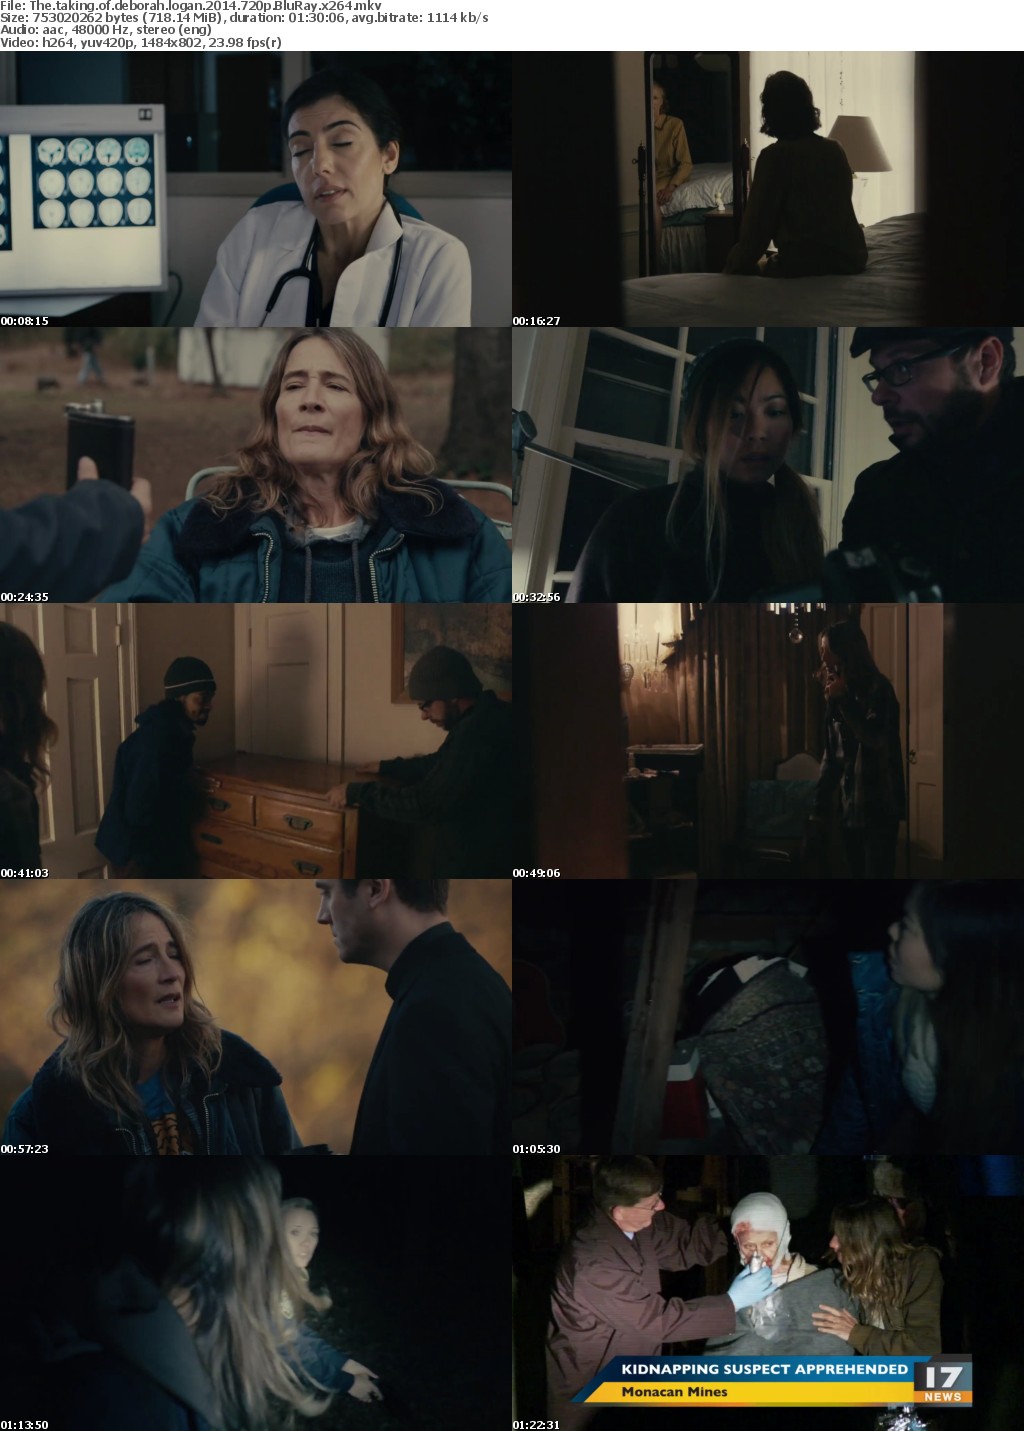 The Taking of Deborah Logan (2014) 720p BluRay x264 - MoviesFD